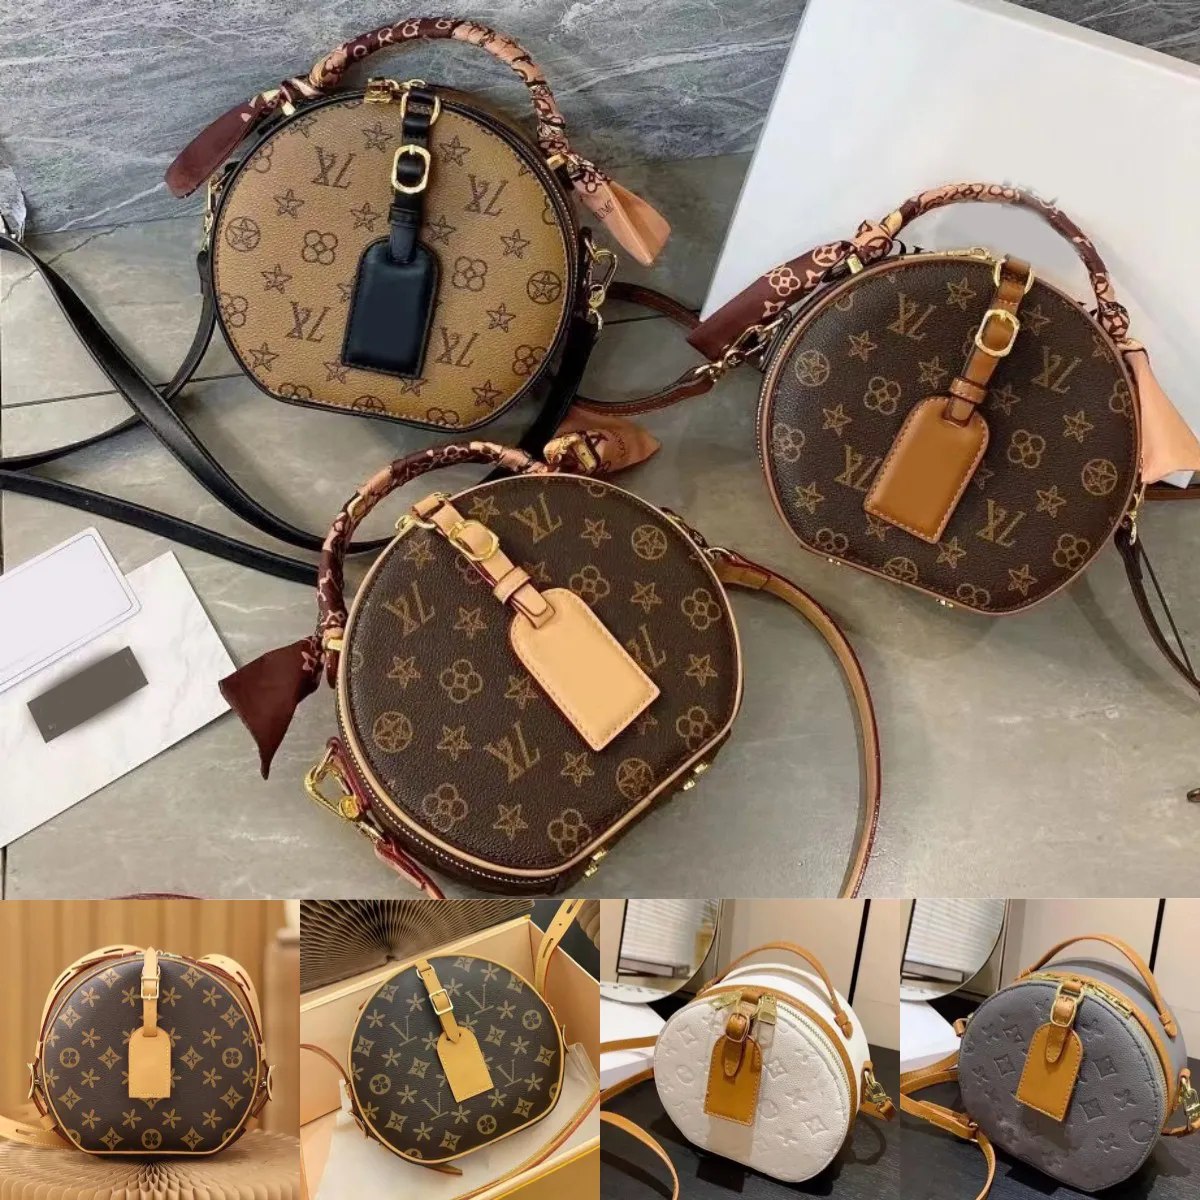 10A Luxury Designer Boite Chapeau Round Bag Cake Cowhide Shoulder Crossbody Bags Nano Handbags Clutchs Women Phone Camera Purses Makeup Bag Dhgate Shoulder Bags New